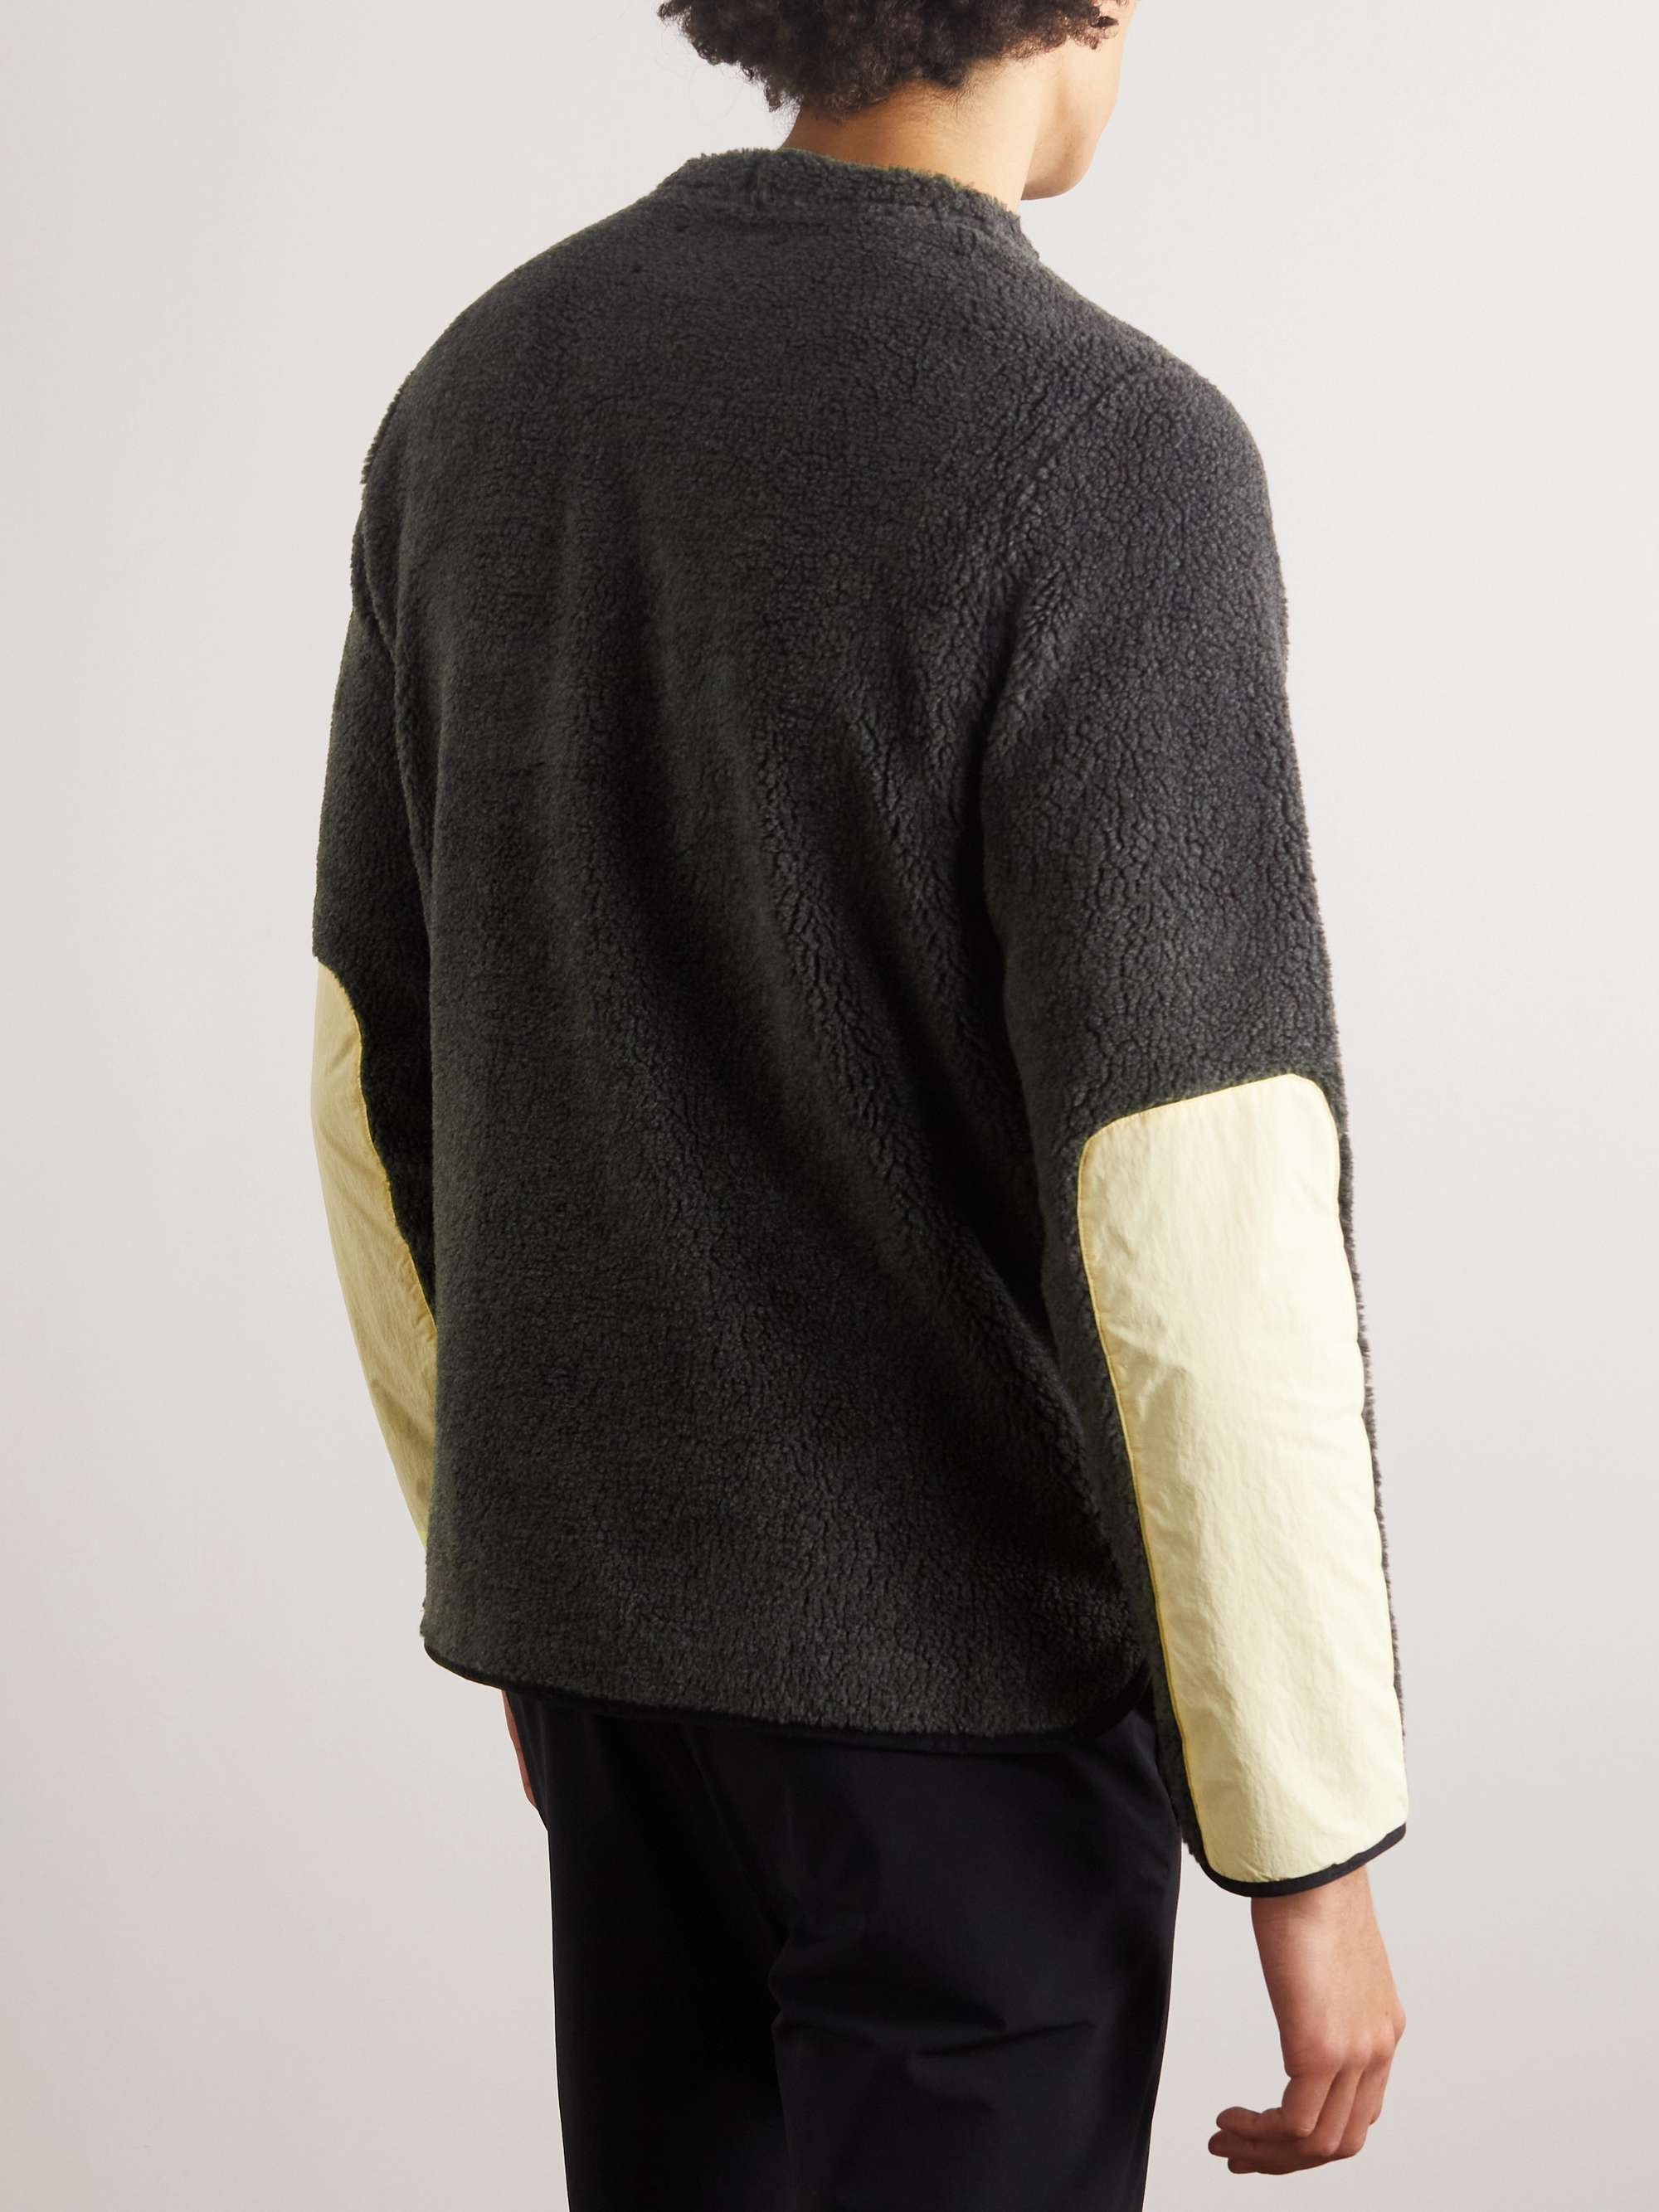 DISTRICT VISION Sola Shell and Mesh-Trimmed Polartec® Fleece Sweatshirt